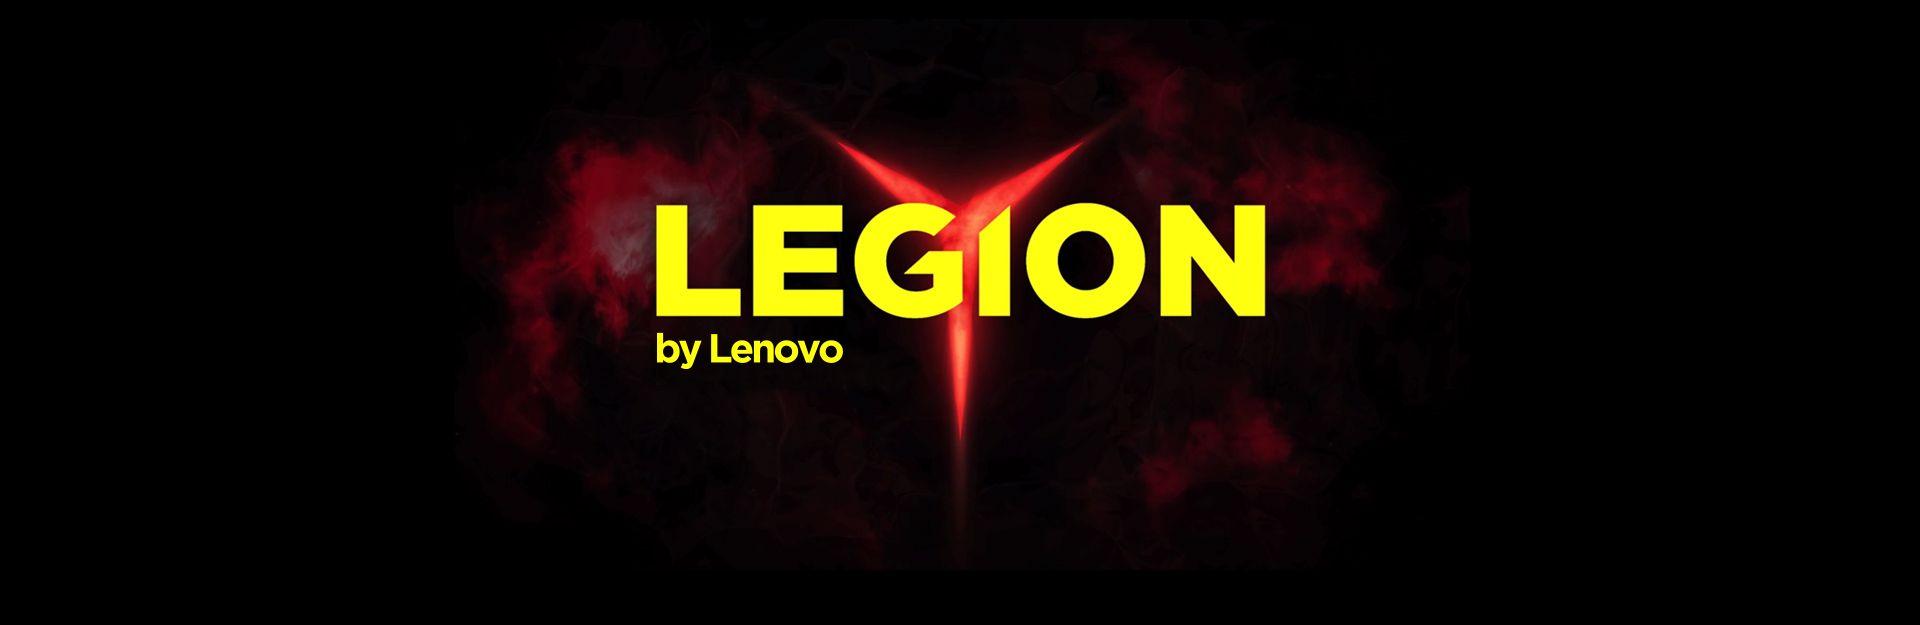 46 Lenovo Legion Wallpapers  WallpaperSafari